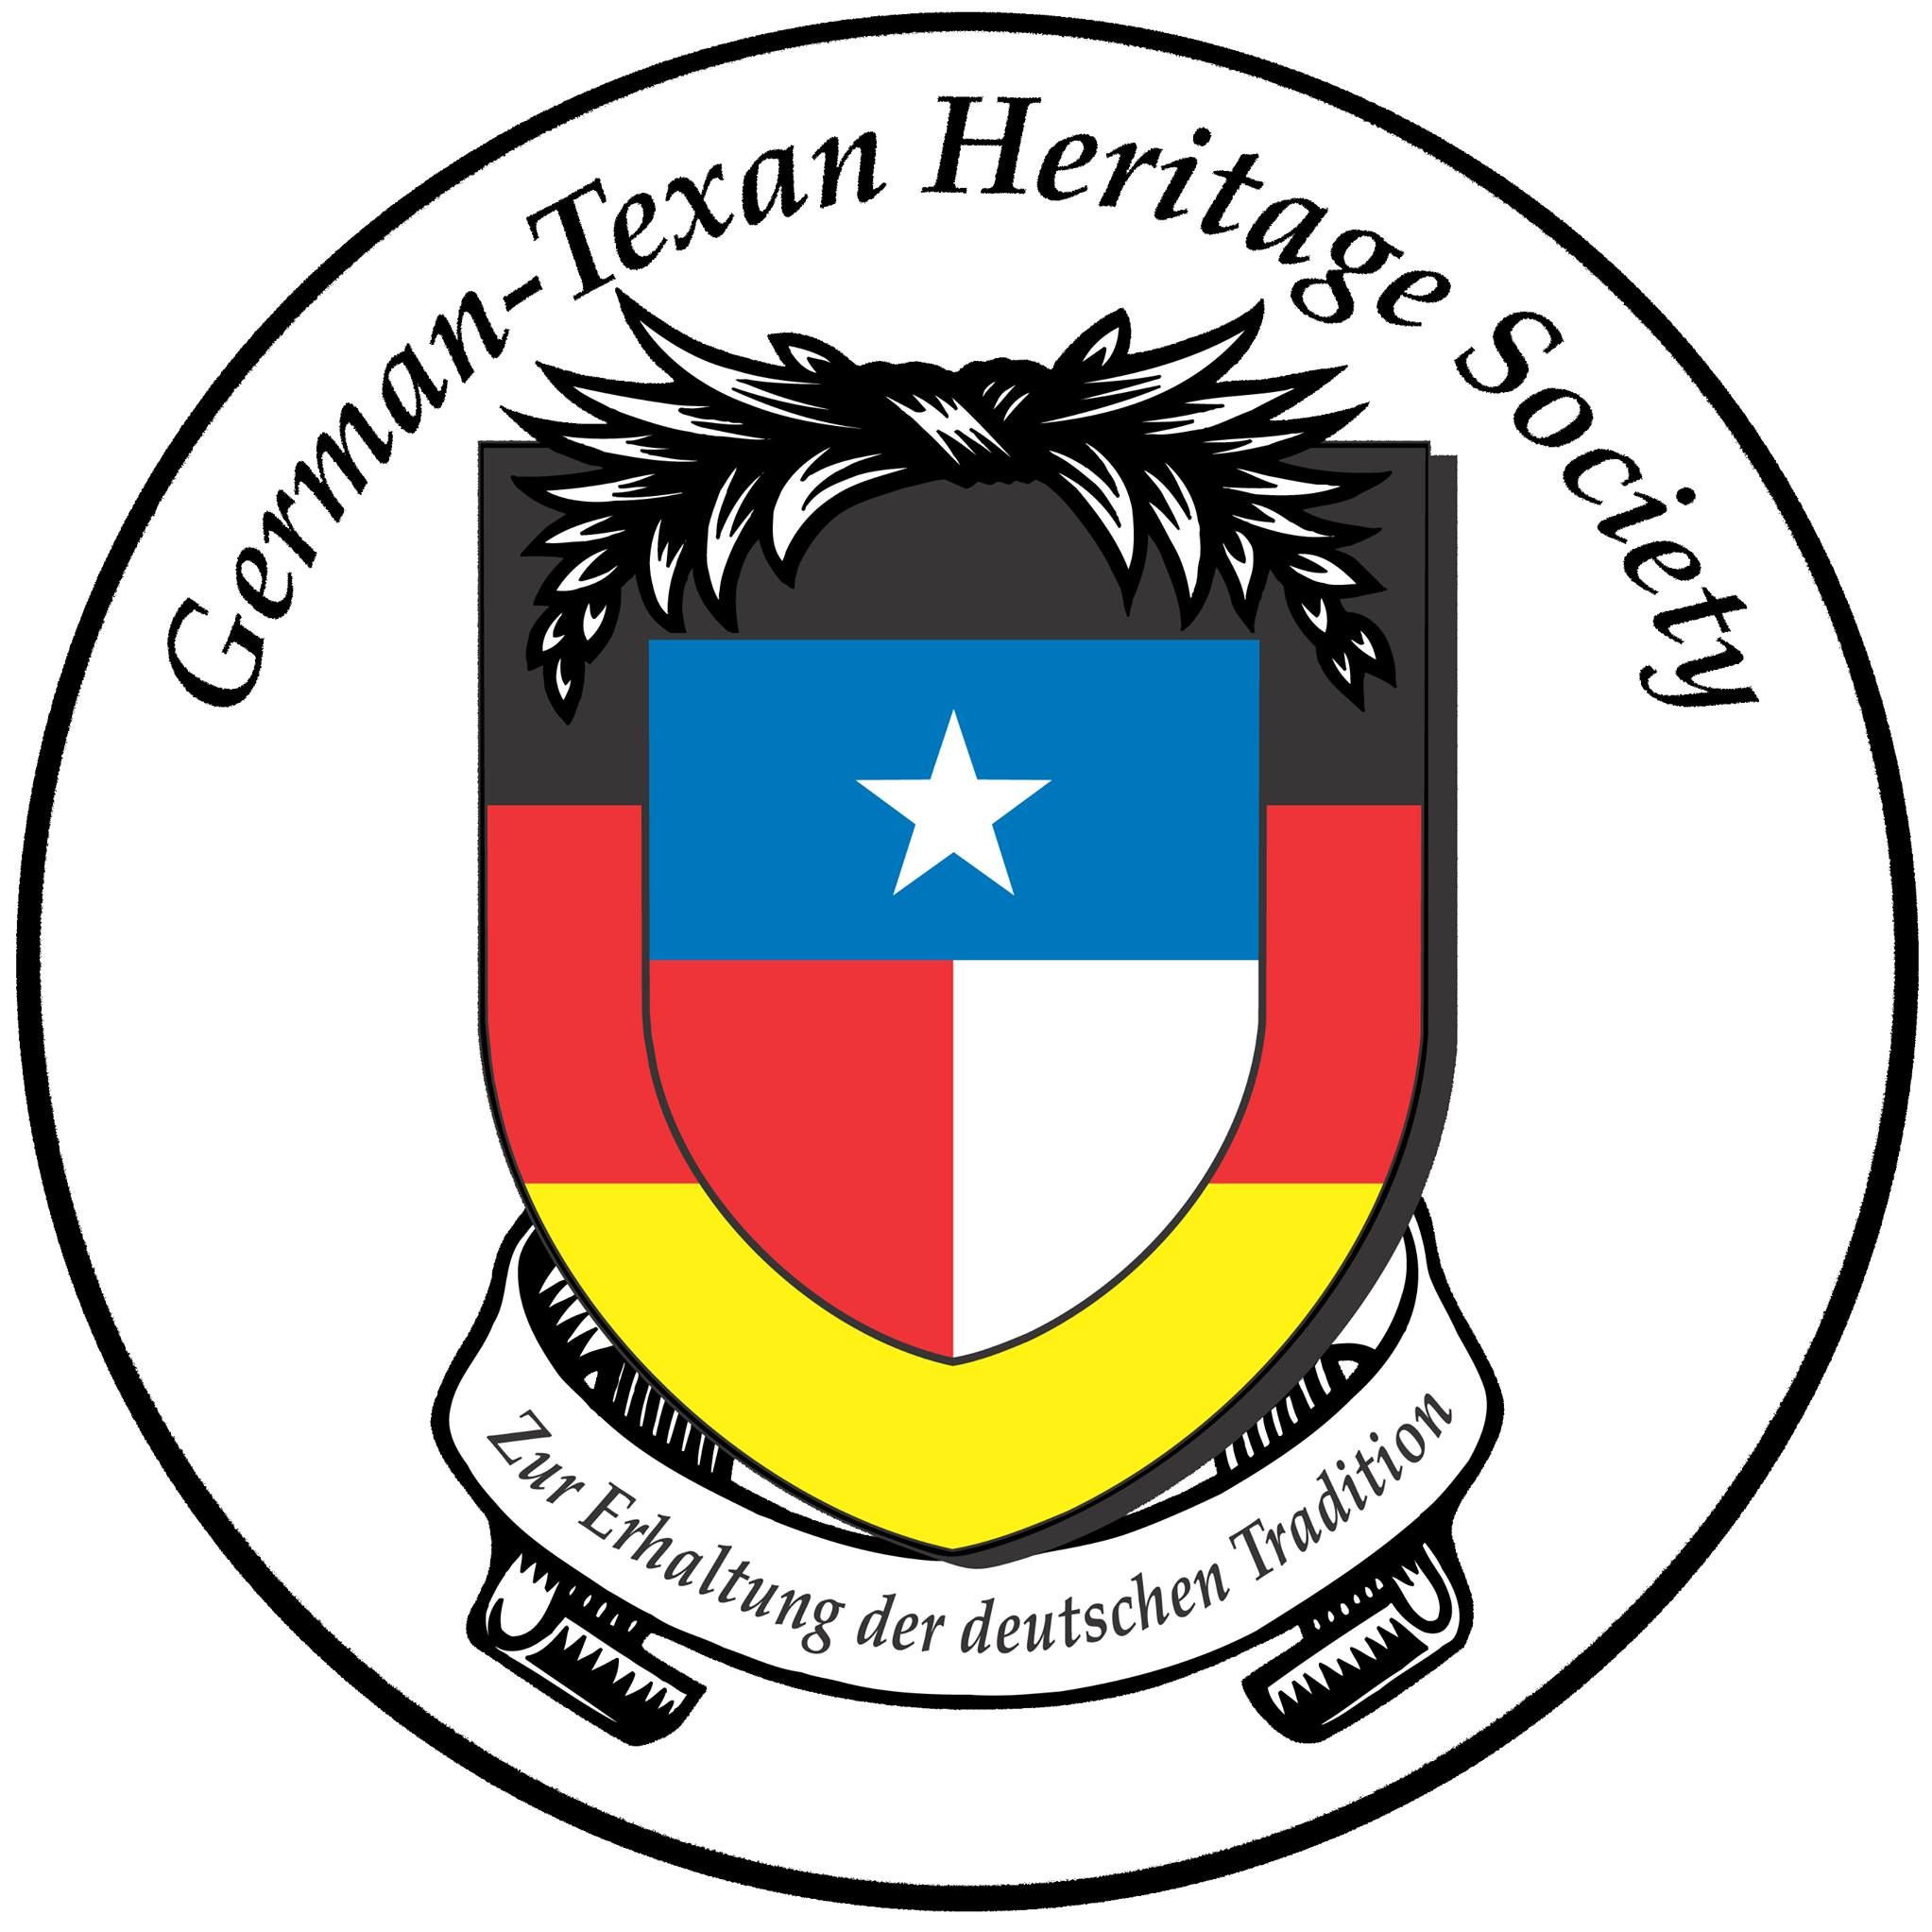 German Organization in Houston Texas - German Texan Heritage Society